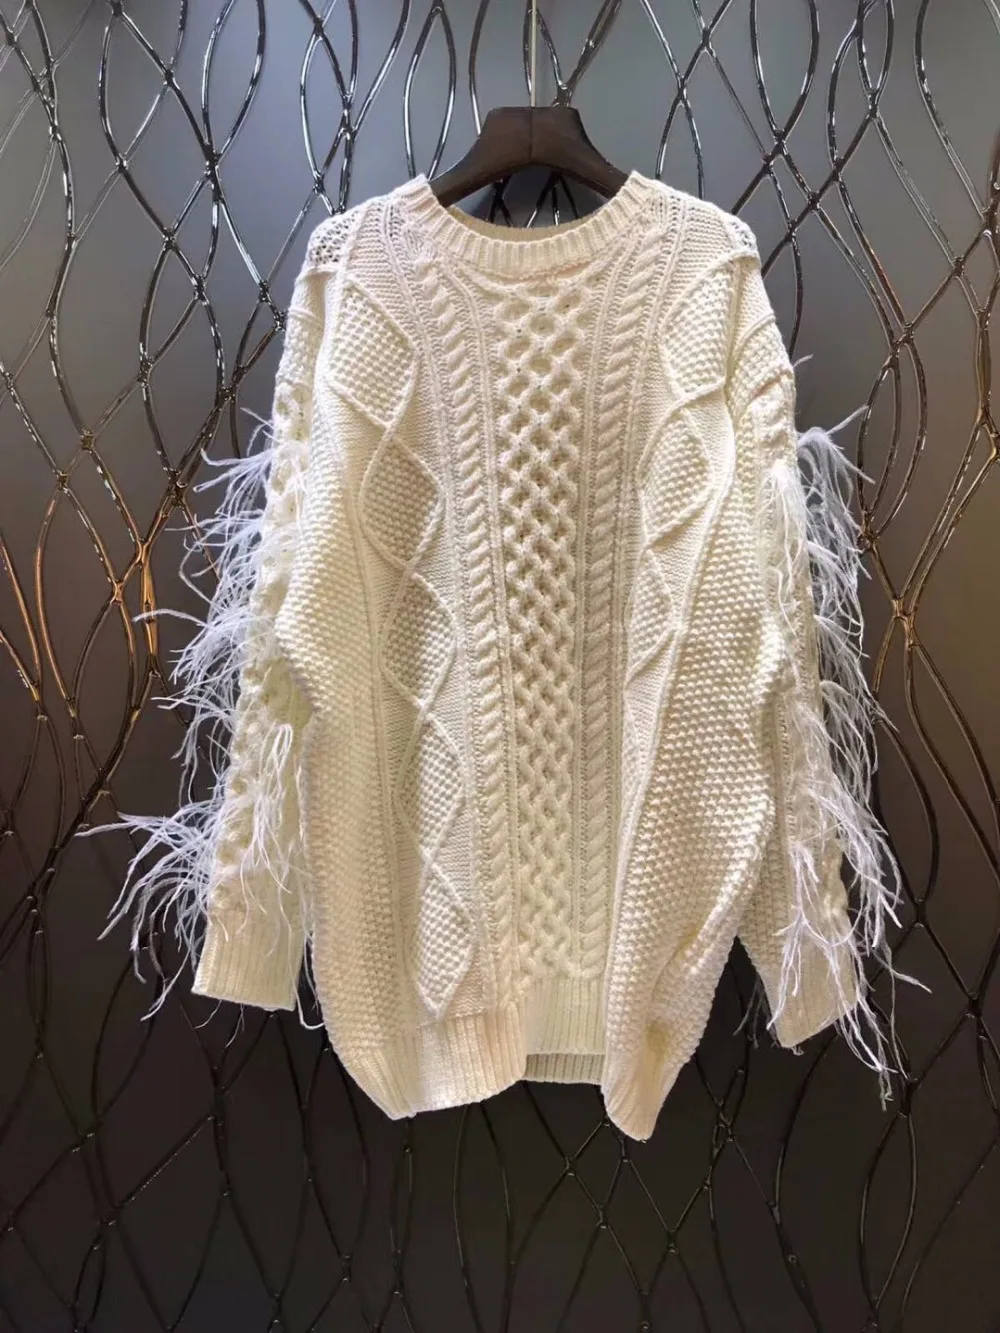 WHITNEY WANG осень зима мода уличная страуса свитер с перьями женский джемпер пуловеры WW-2171